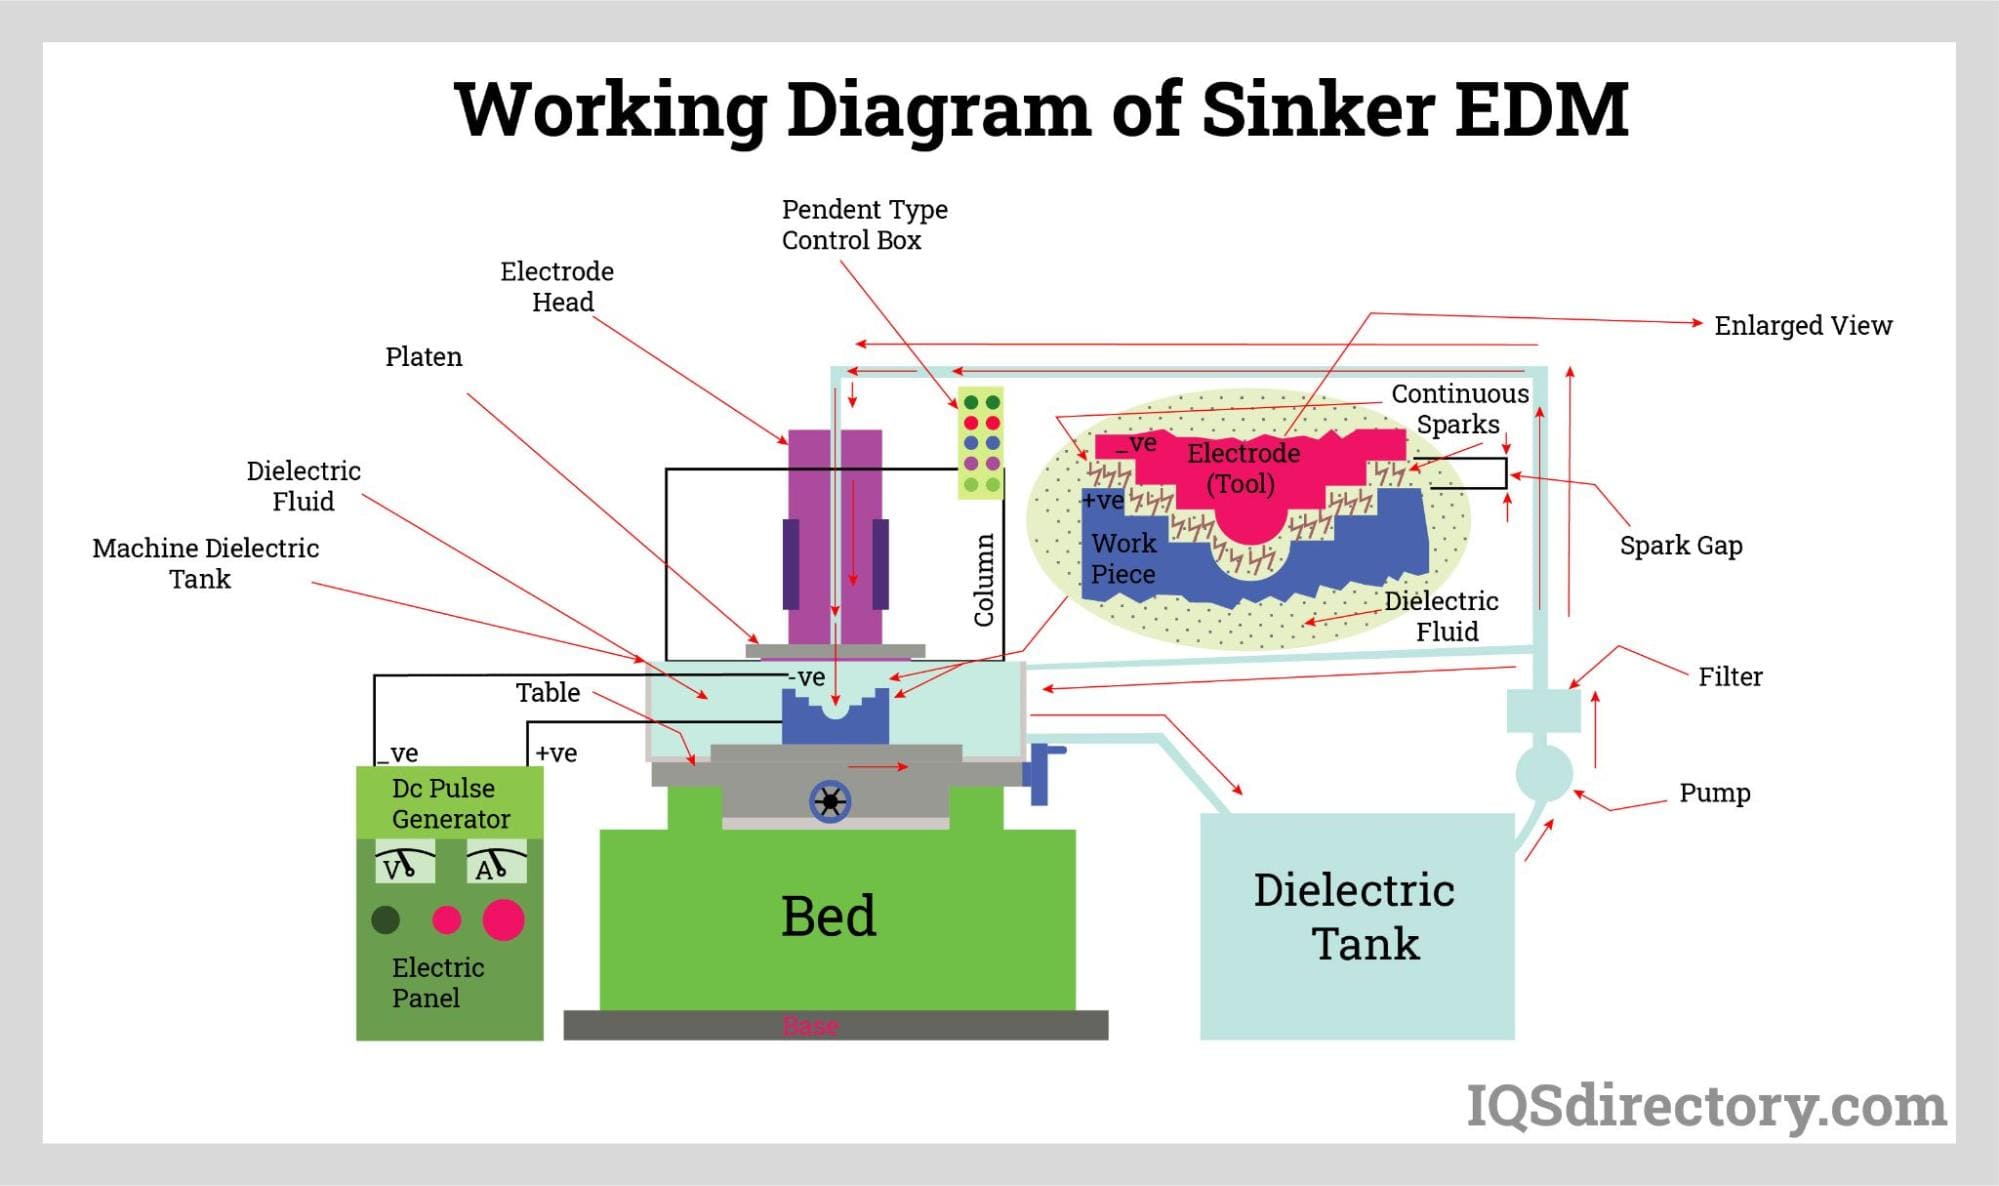 Working Diagram of Sinker EDM